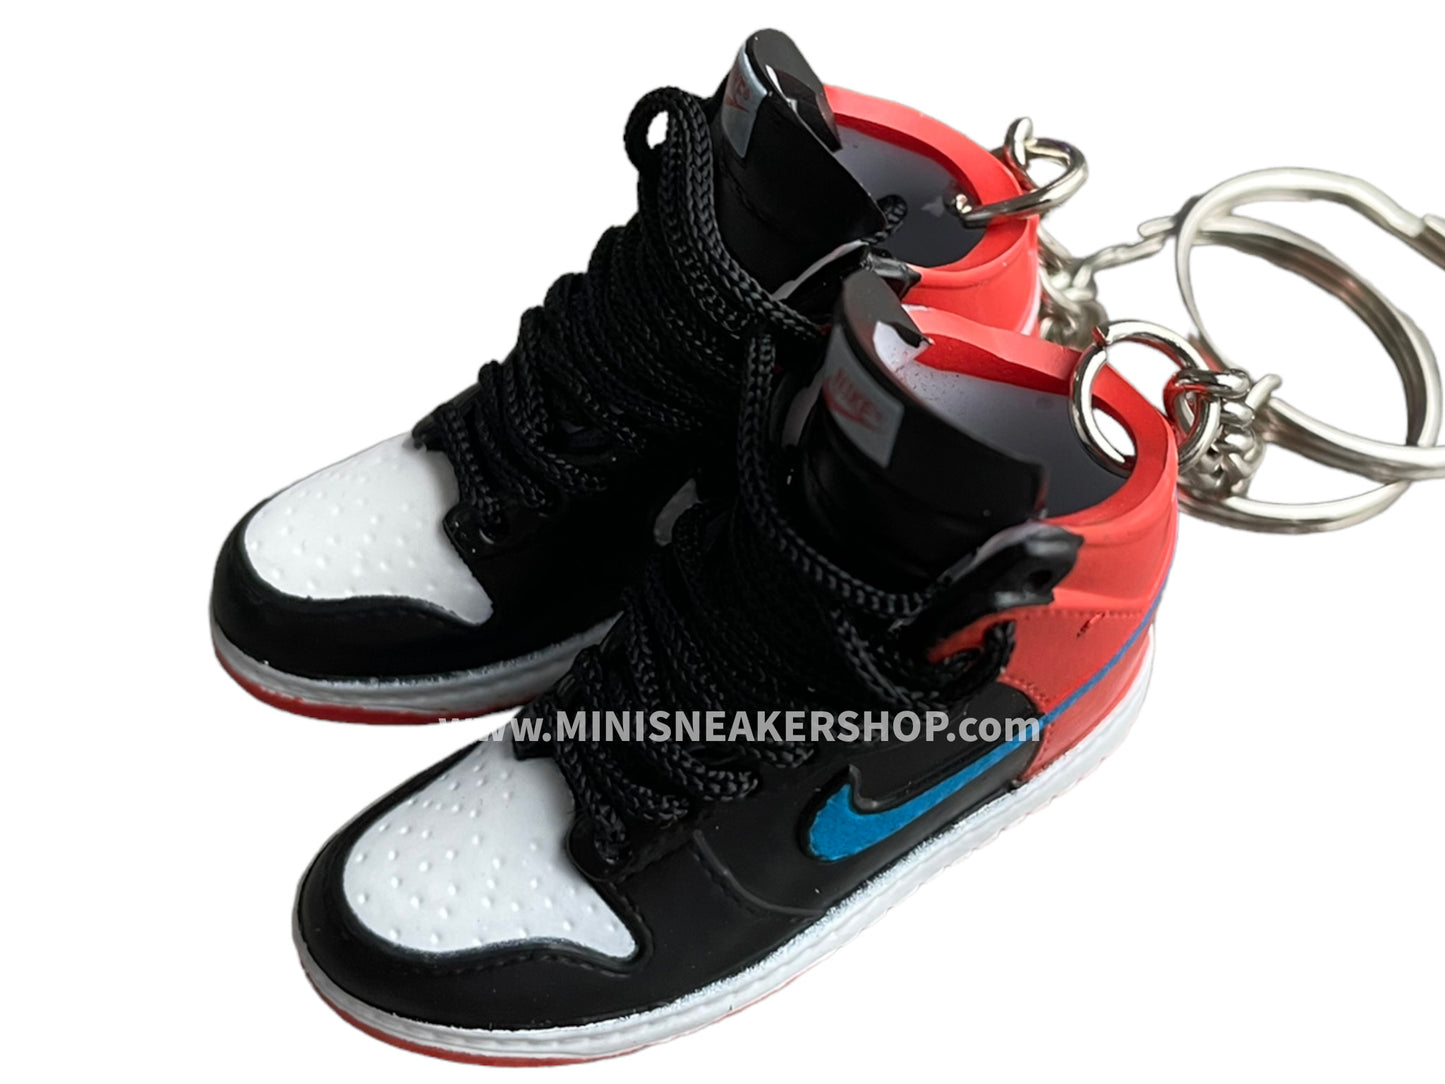 Mini sneaker keychain 3D Dunk - Red Blue